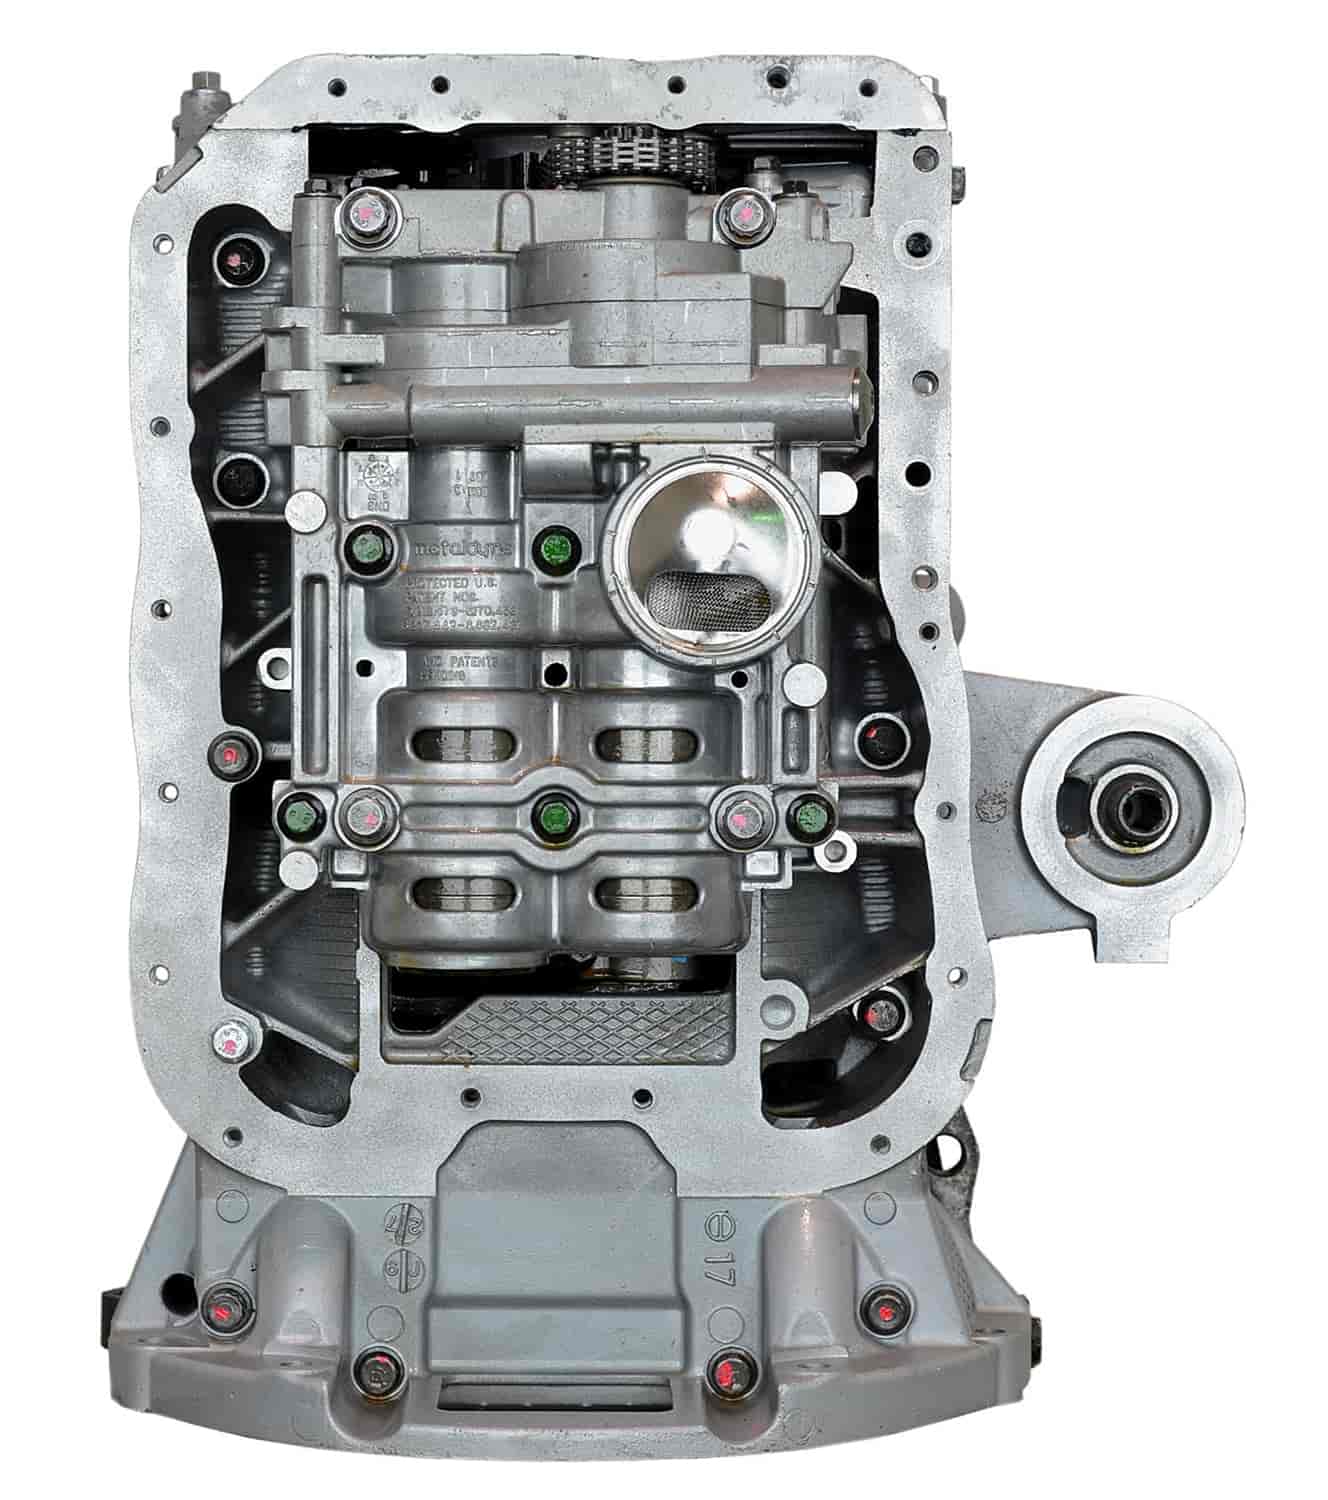 Remanufactured Crate Engine for 2009-2011 Hyundai Santa Fe & Sonata with 2.4L L4